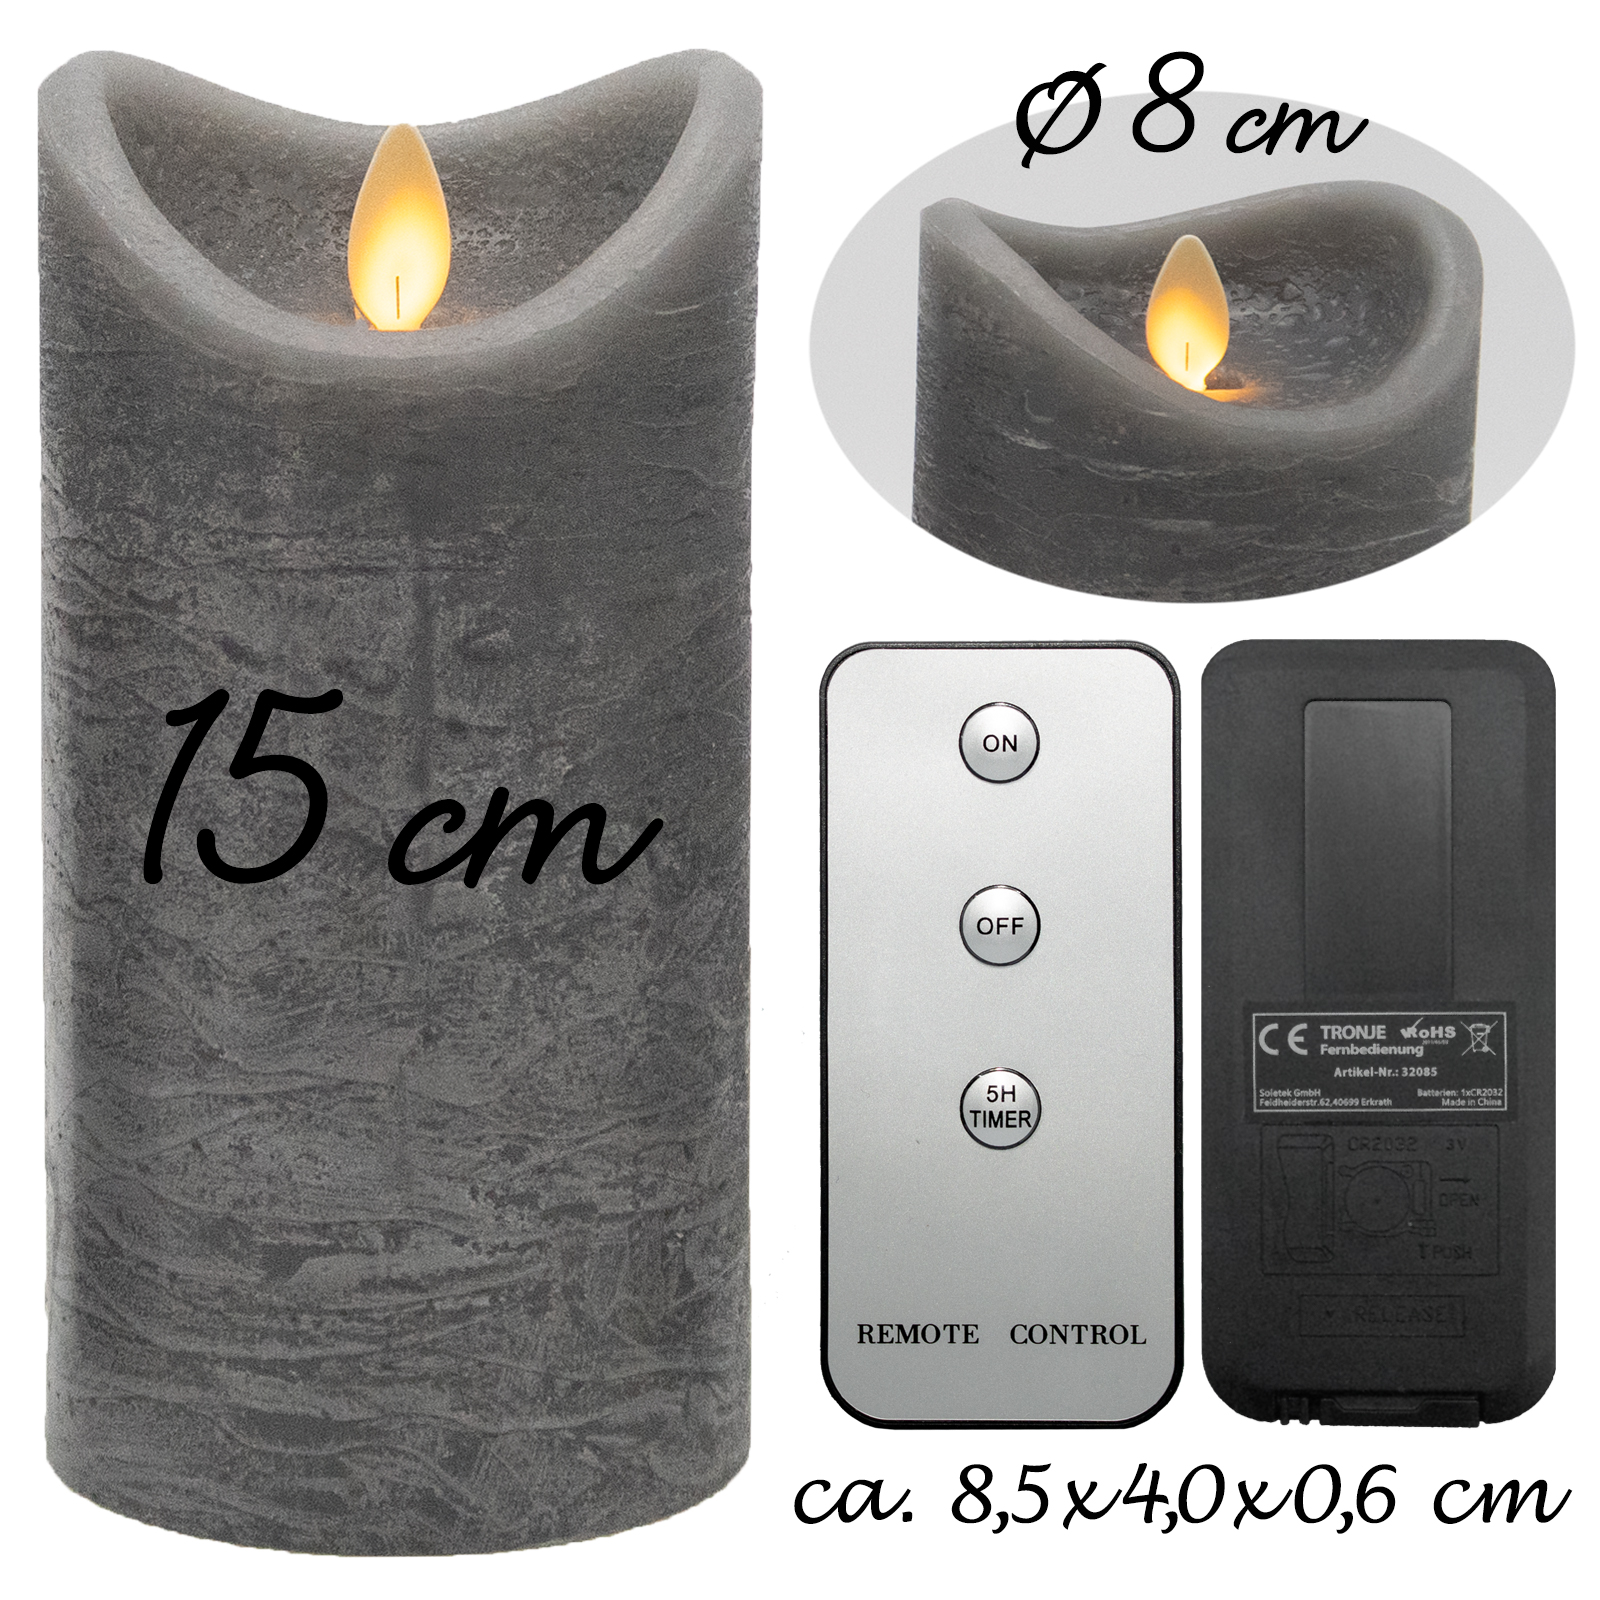 Tronje, LED-Echtwachskerze Ø8x15cm Grau Rustik mit Fernbedienung - Kerzenlichtsimulation